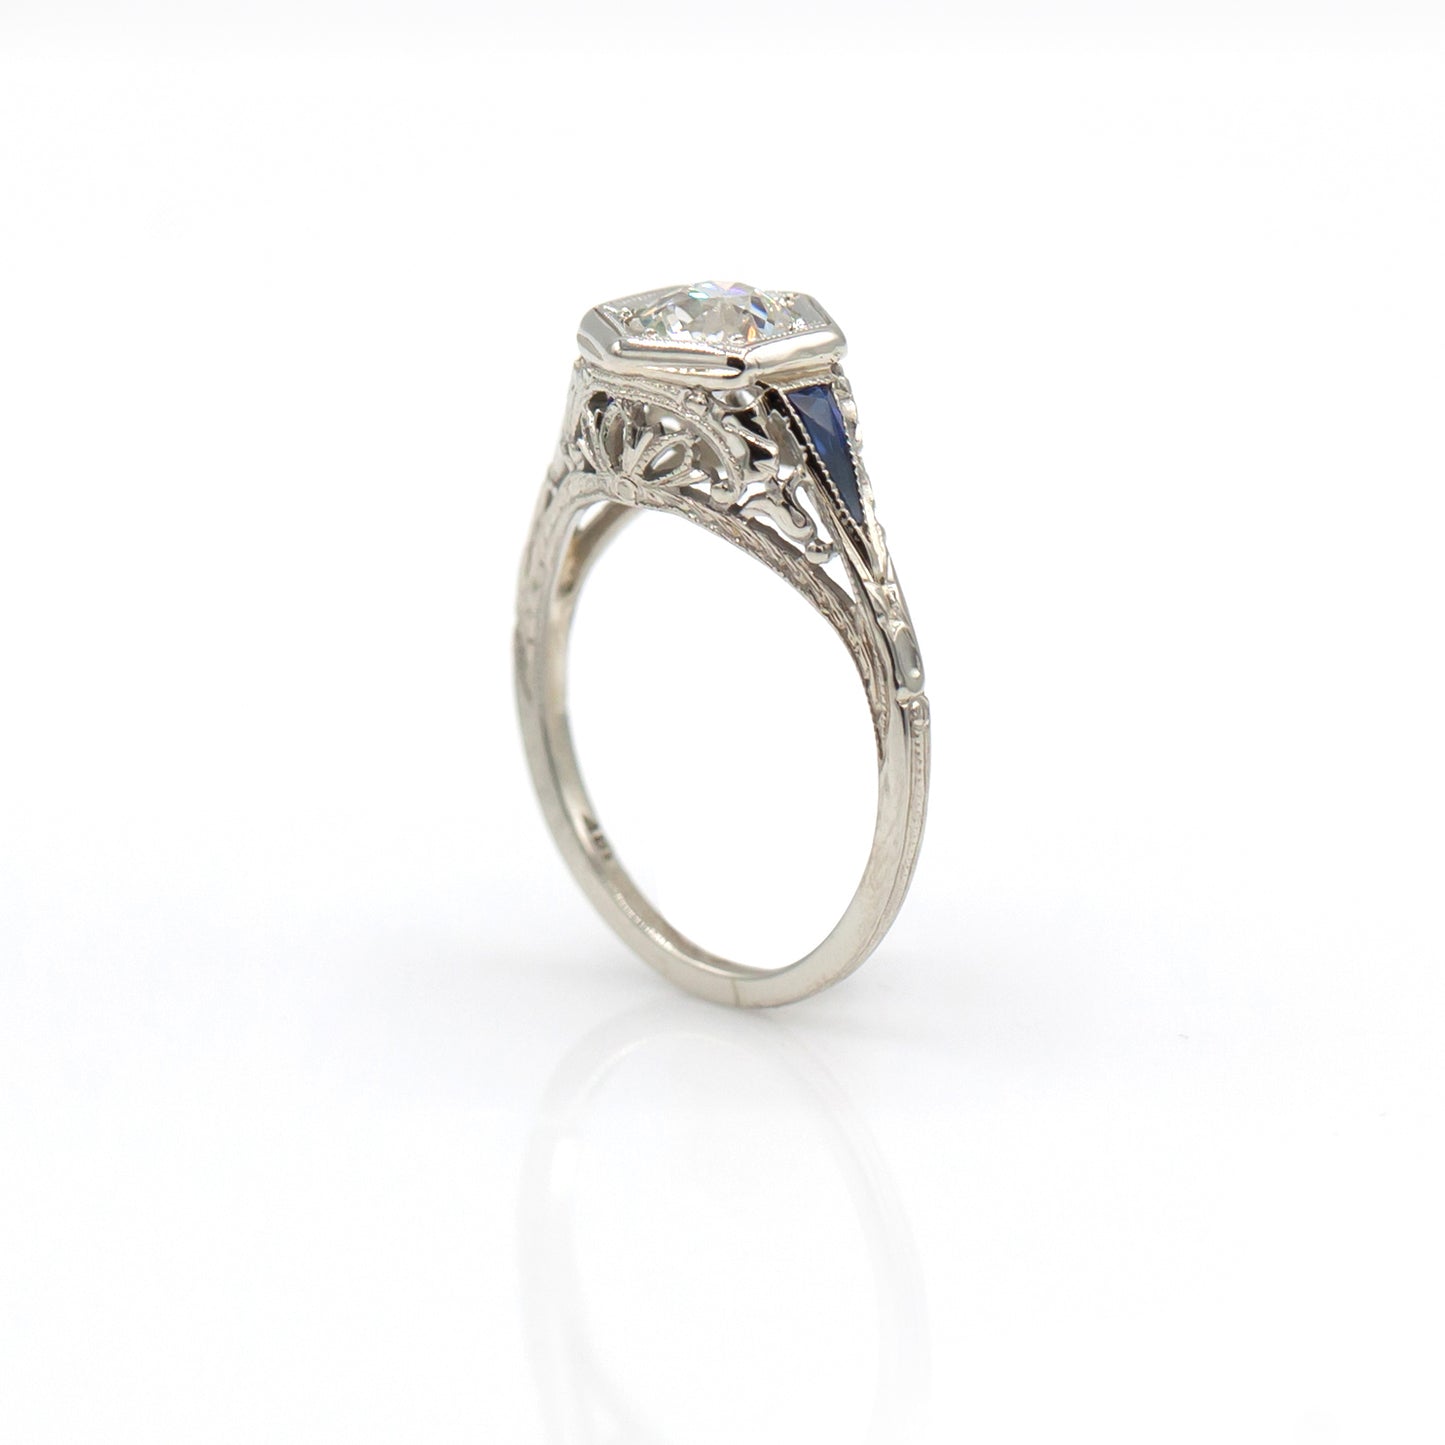 Estate Collection 14K Art Deco Diamond & Sapphire Ring